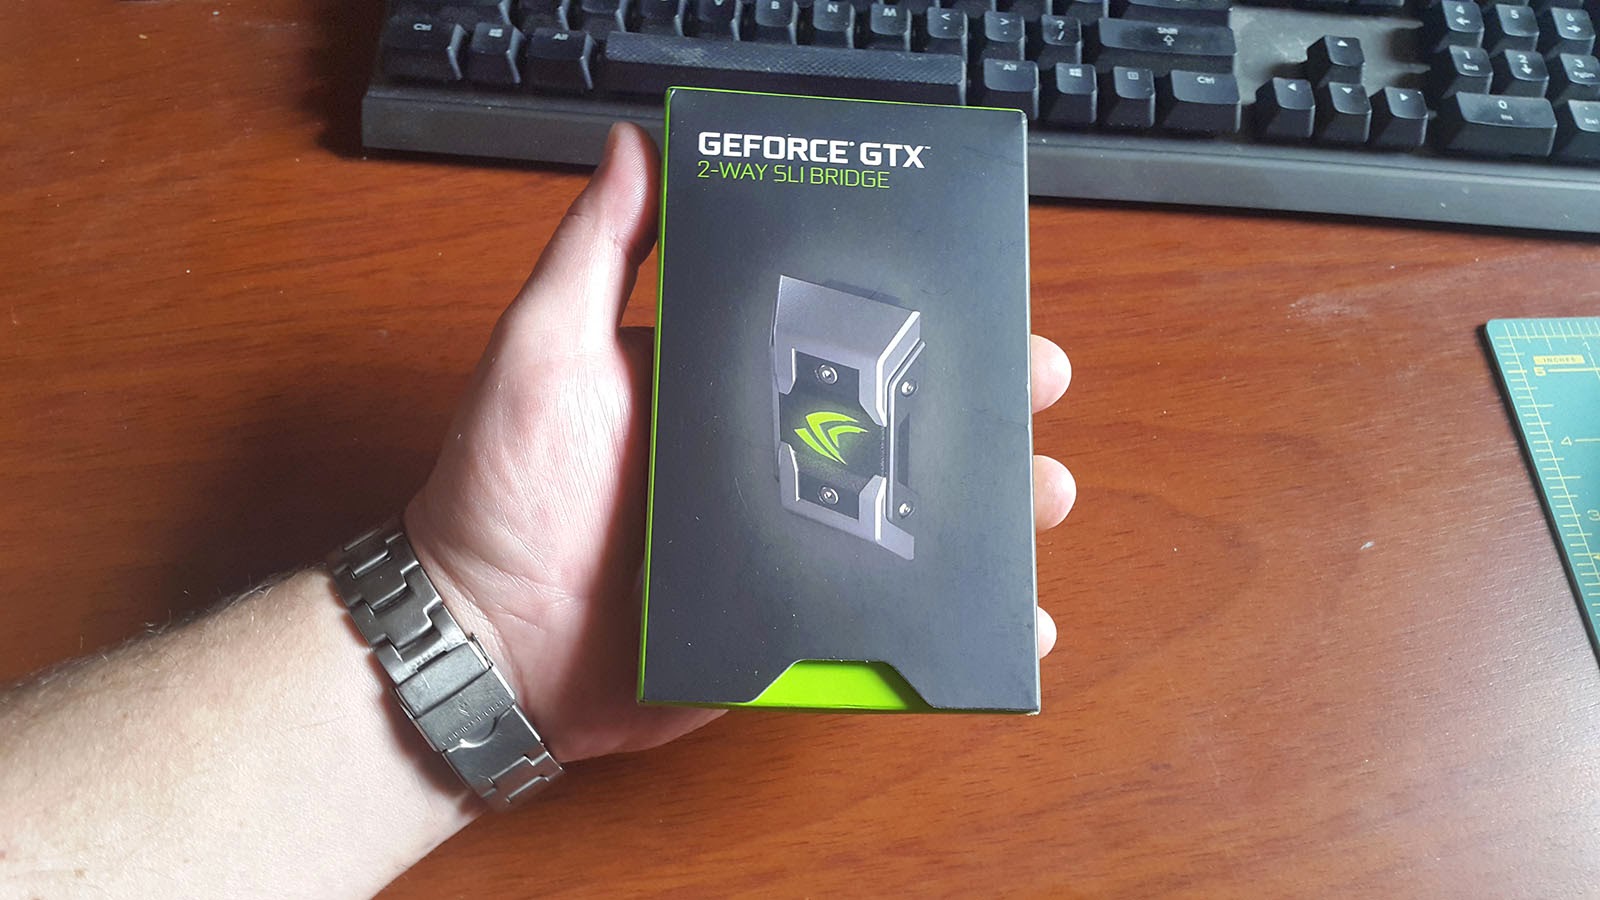 NVIDIA GeForce GTX SLI Bridge (2-Way)